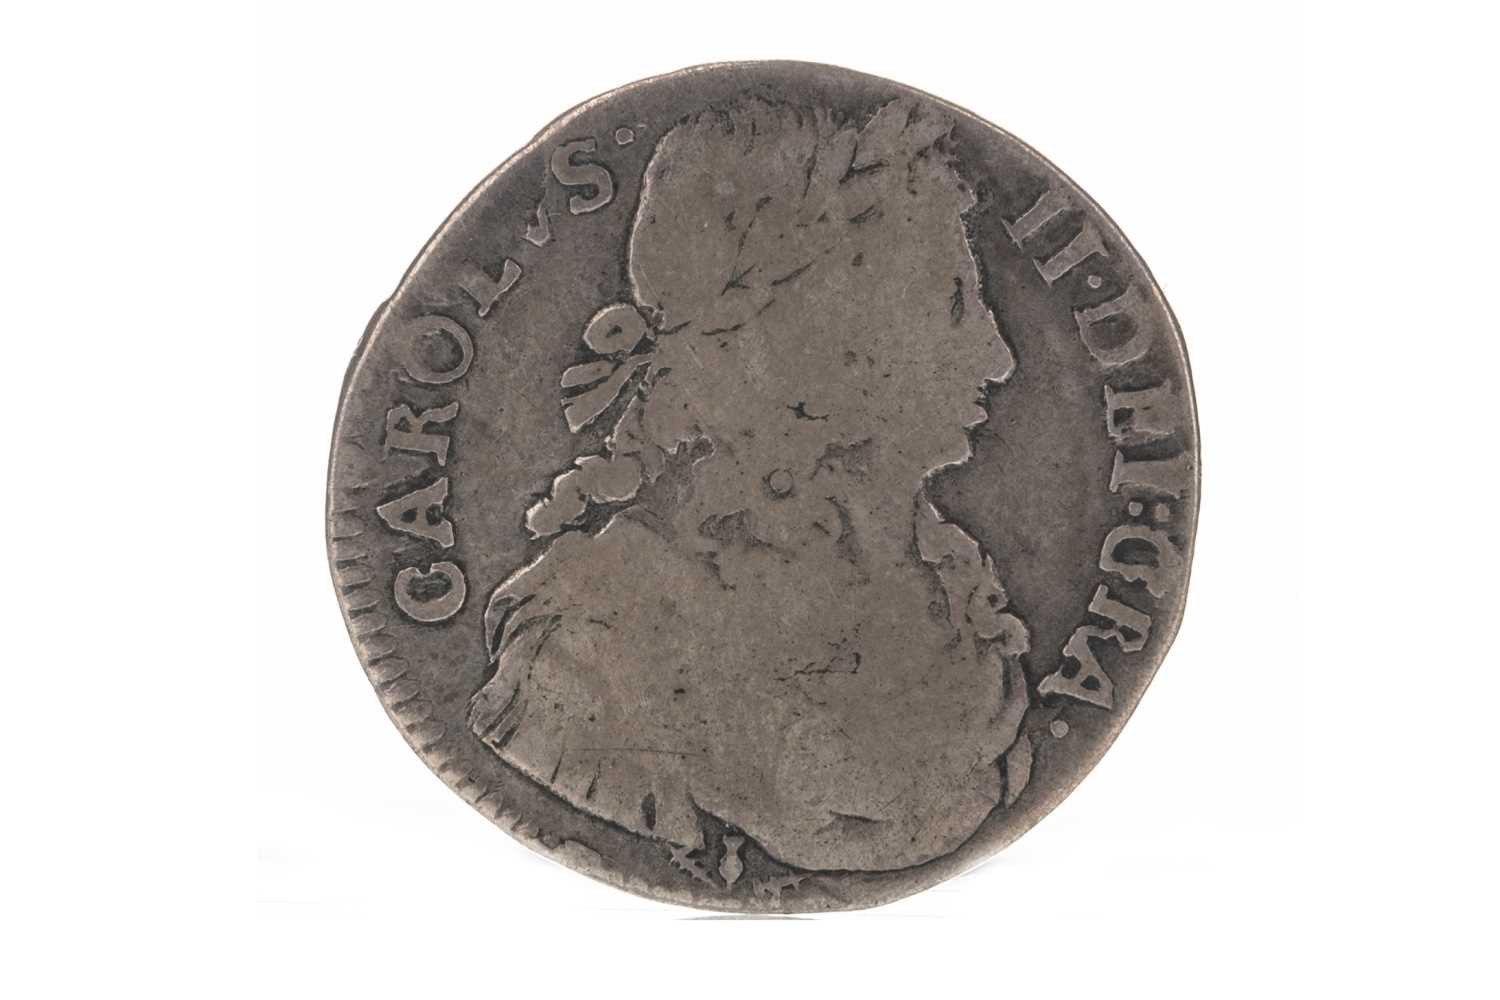 Lot 80 - SCOTLAND - CHARLES II (1649 - 1685) QUARTER DOLLAR OR MERK DATED 1677